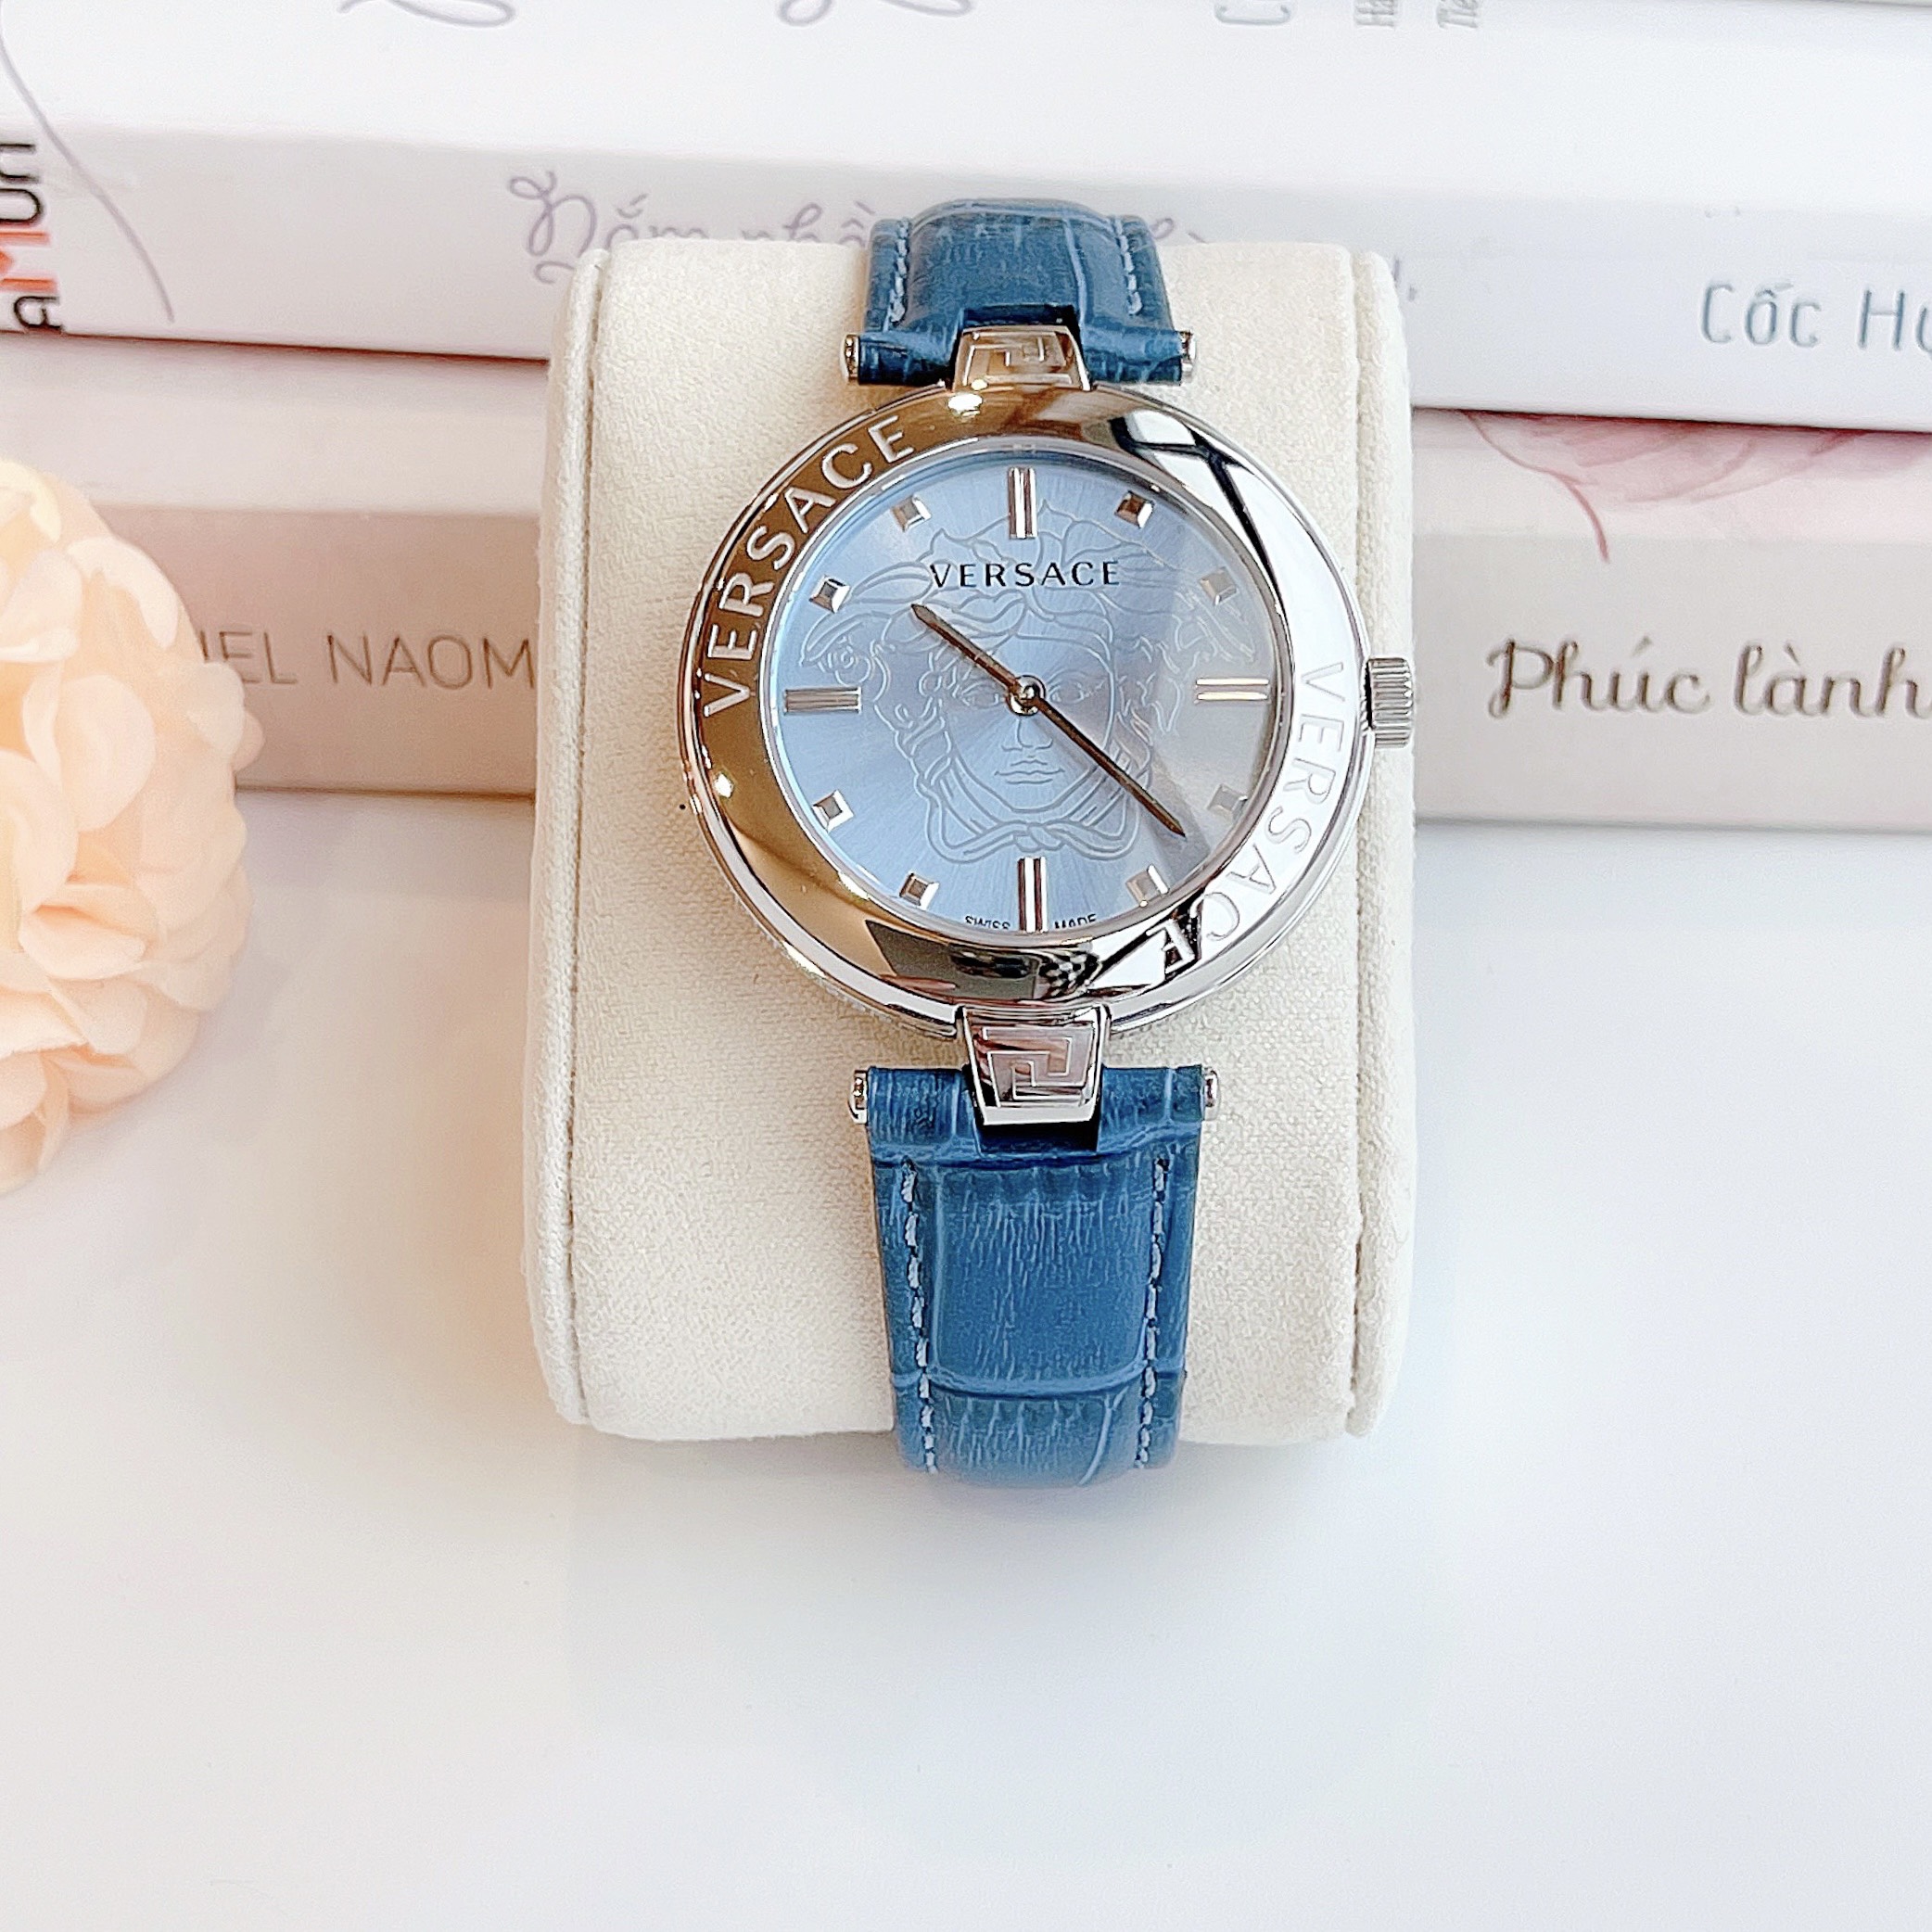 Đồng hồ nữ Versace New Lady Women's Watch